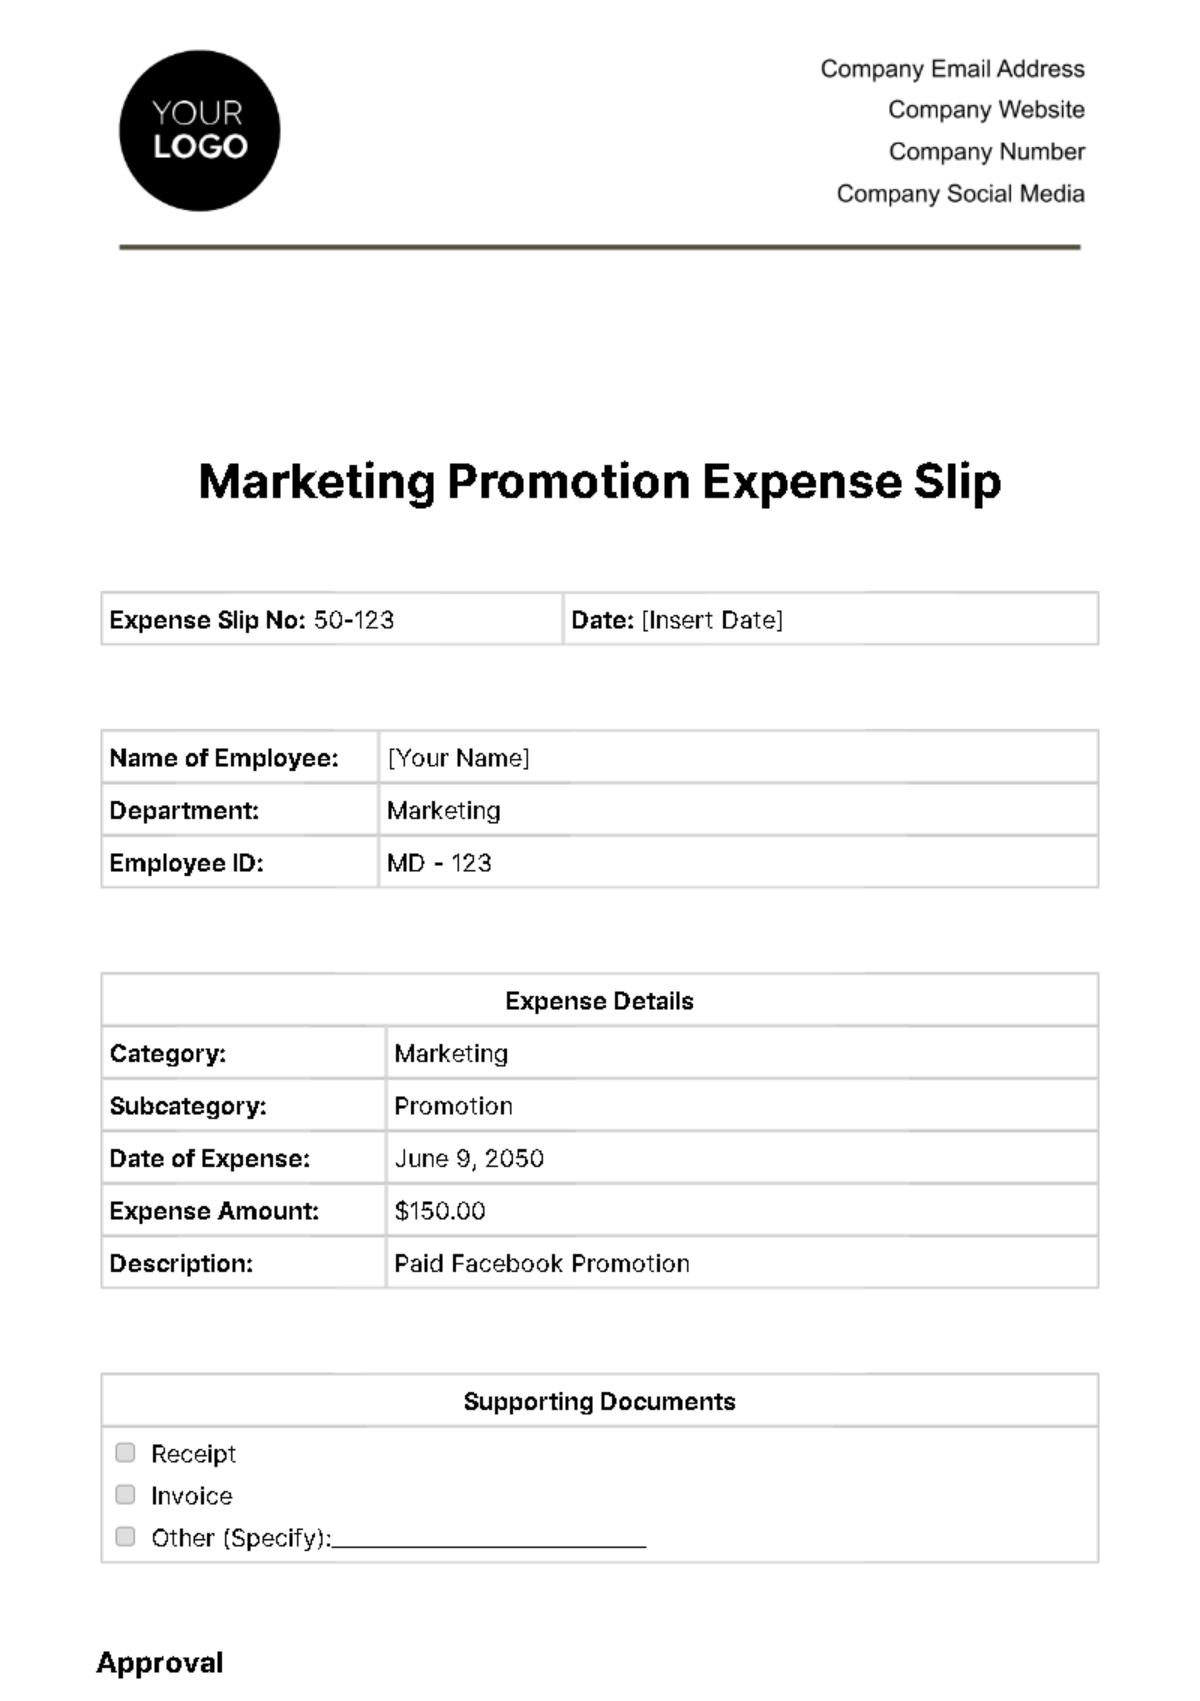 Free Marketing Promotion Expense Slip Template